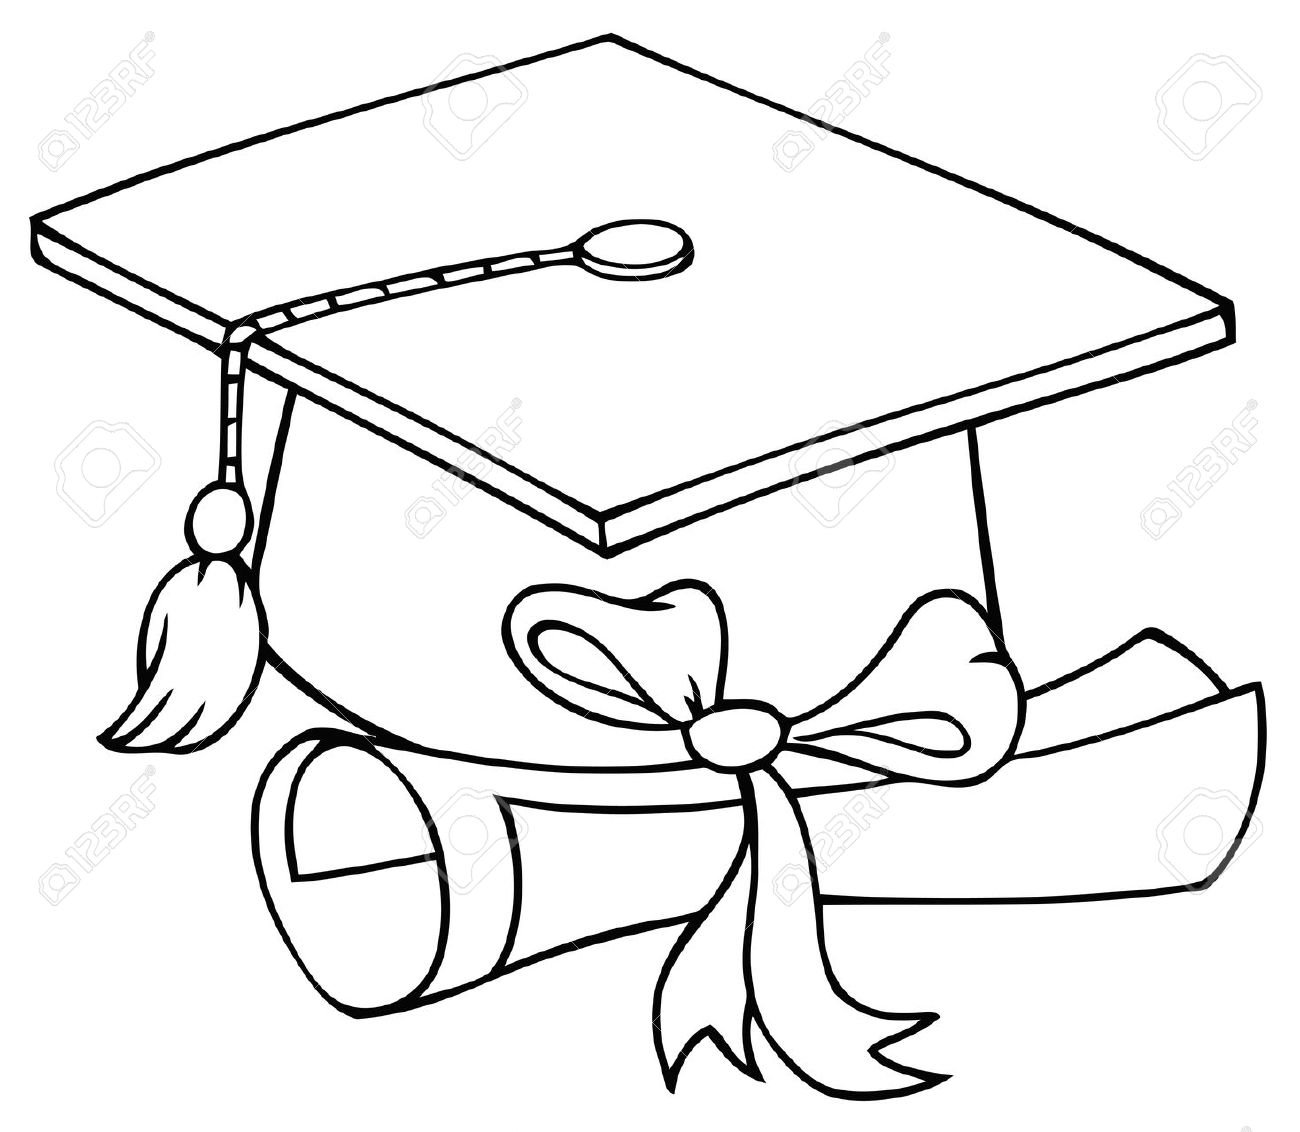 Graduation gown coloring page [ Kindergarten graduation coloring page. Graduation cap coloring page. Graduation gown coloring page. This Resolution and file ...